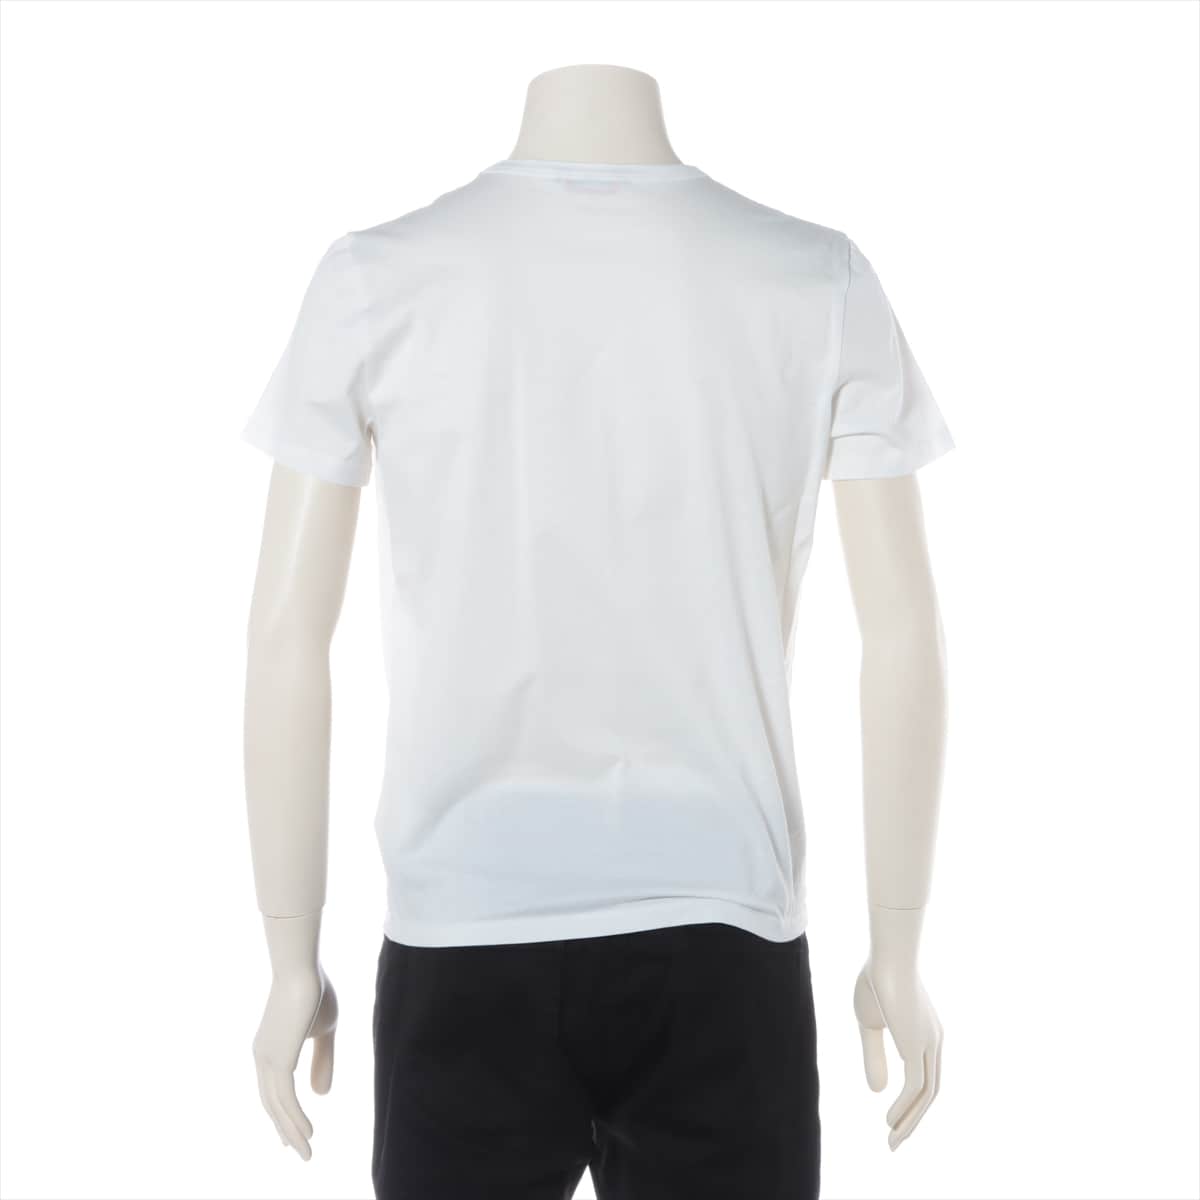 Moncler Genius 1952 18 years Cotton T-shirt S Men's White